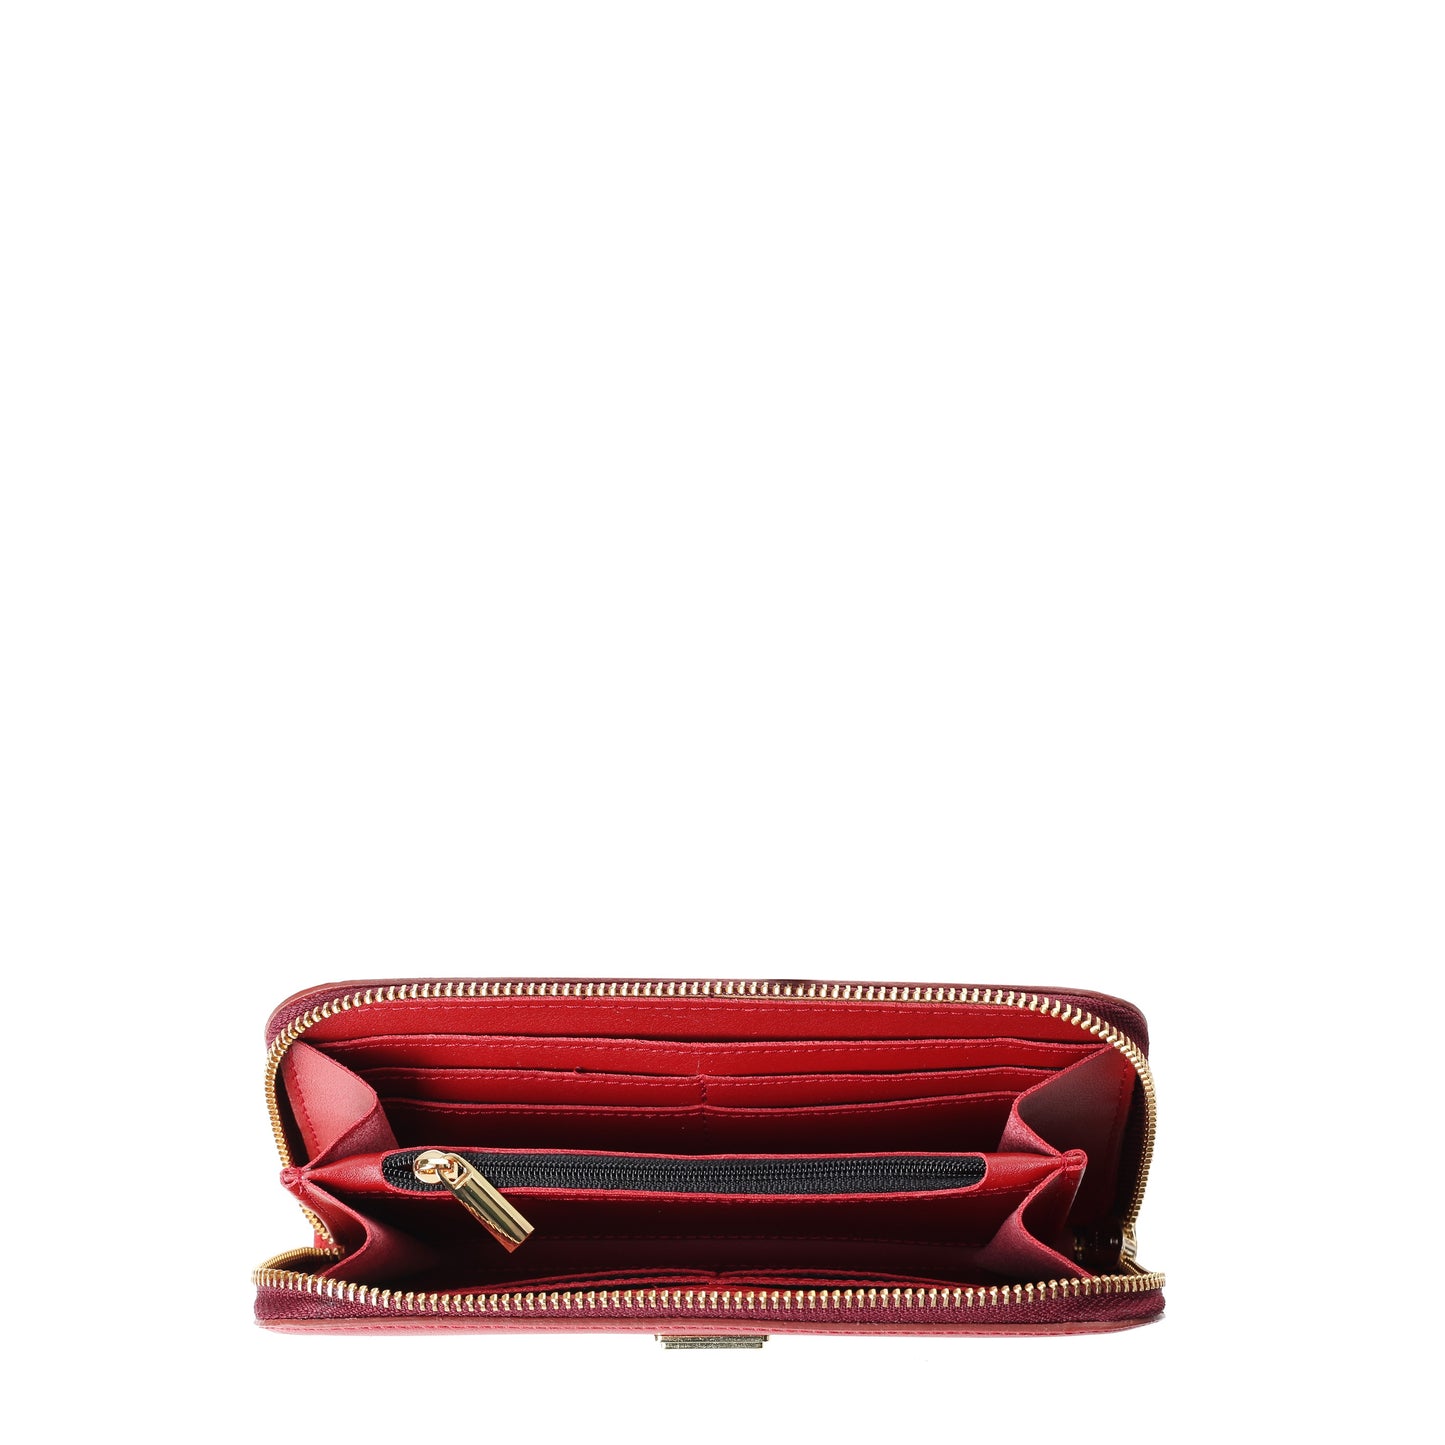 NAPPA CLARET women's leather wallet